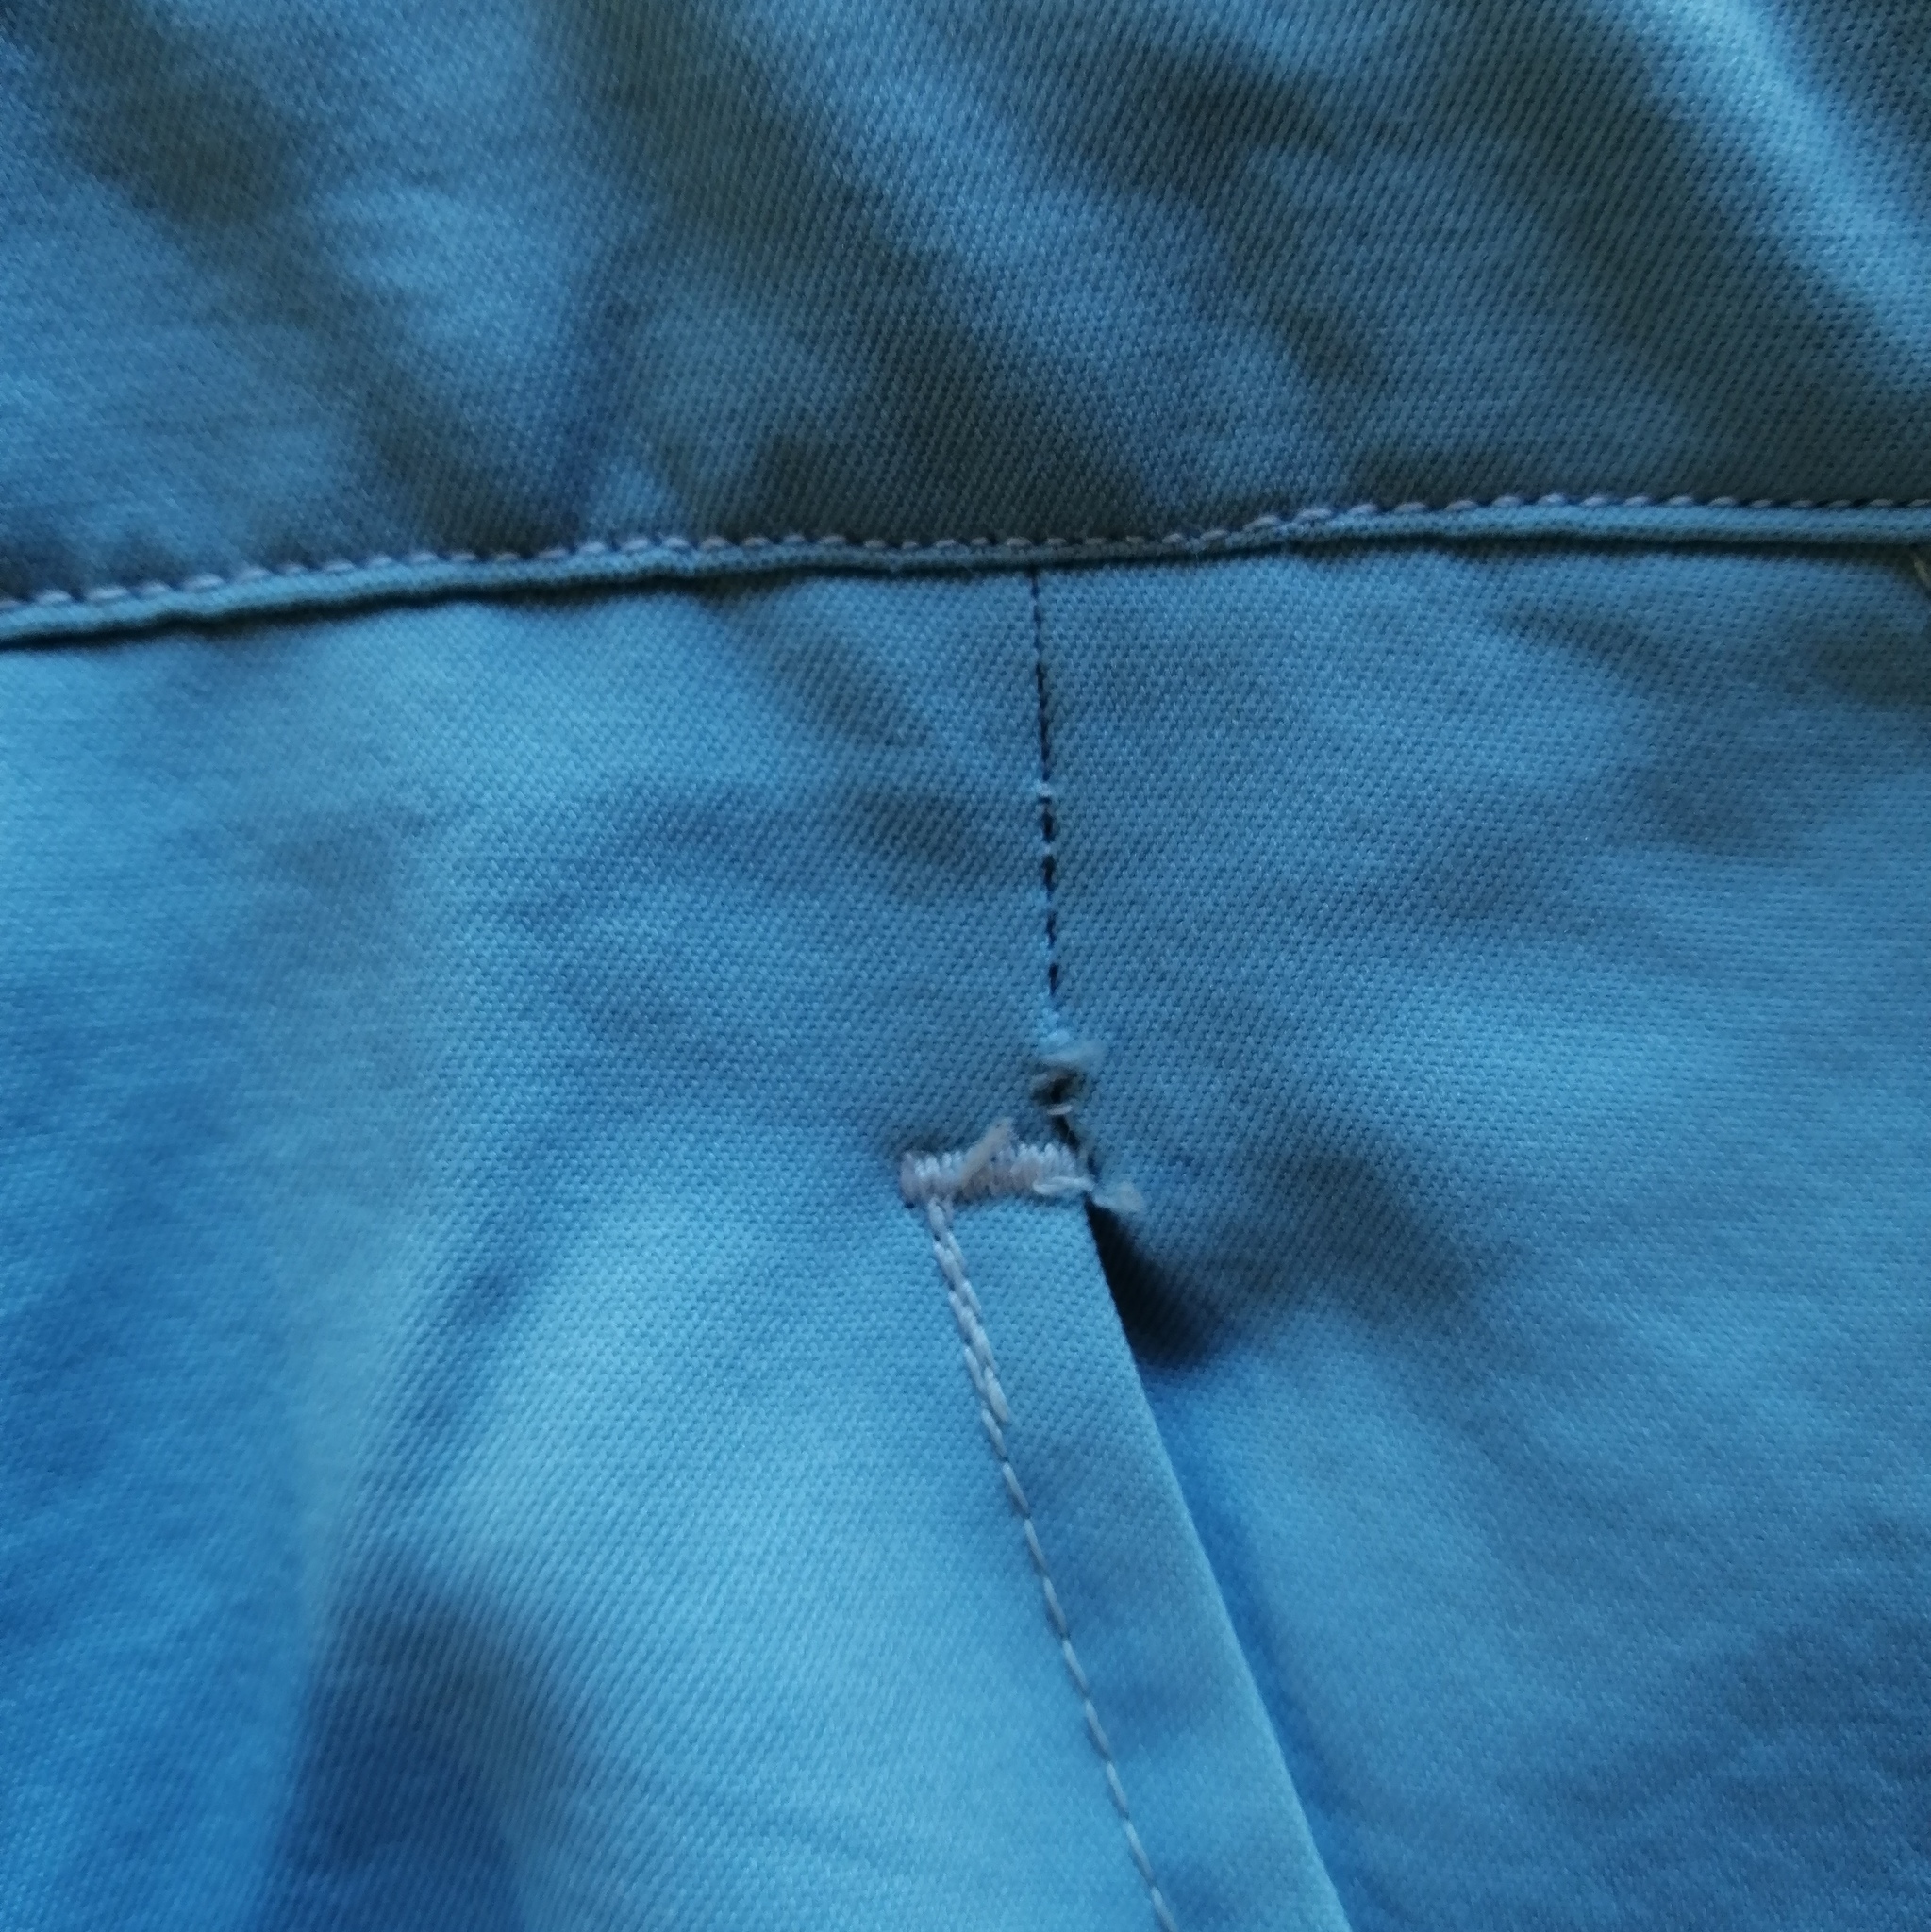 Vintage ljusblå elasta-byxor med band under foten, dragkedja sidan fickor fram